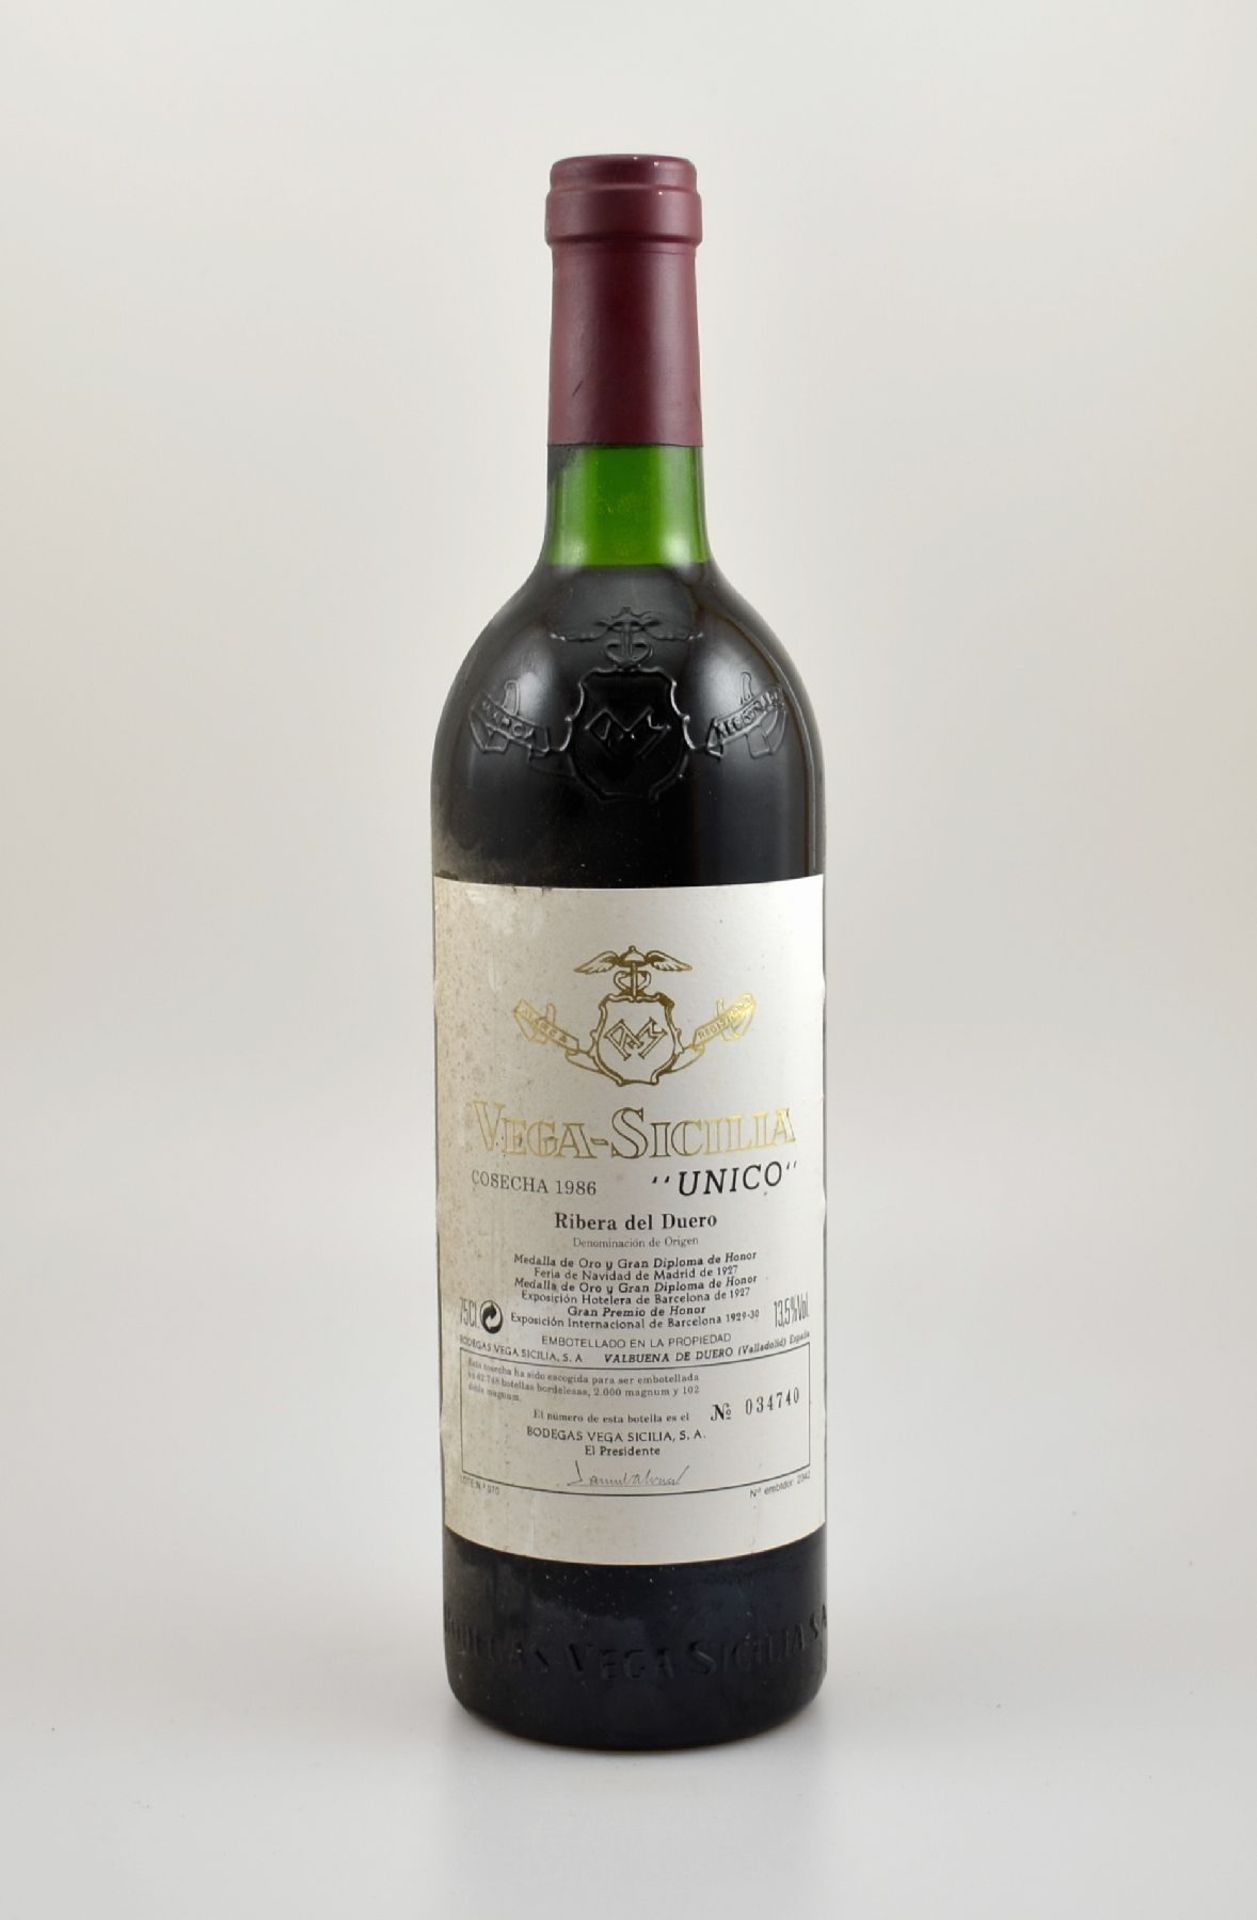 1 Flasche 1986 Vega-Sicilia Unico, Ribera del Duero, ca. 75 cl, 13,5 % Vol., Füllstand: ca. top